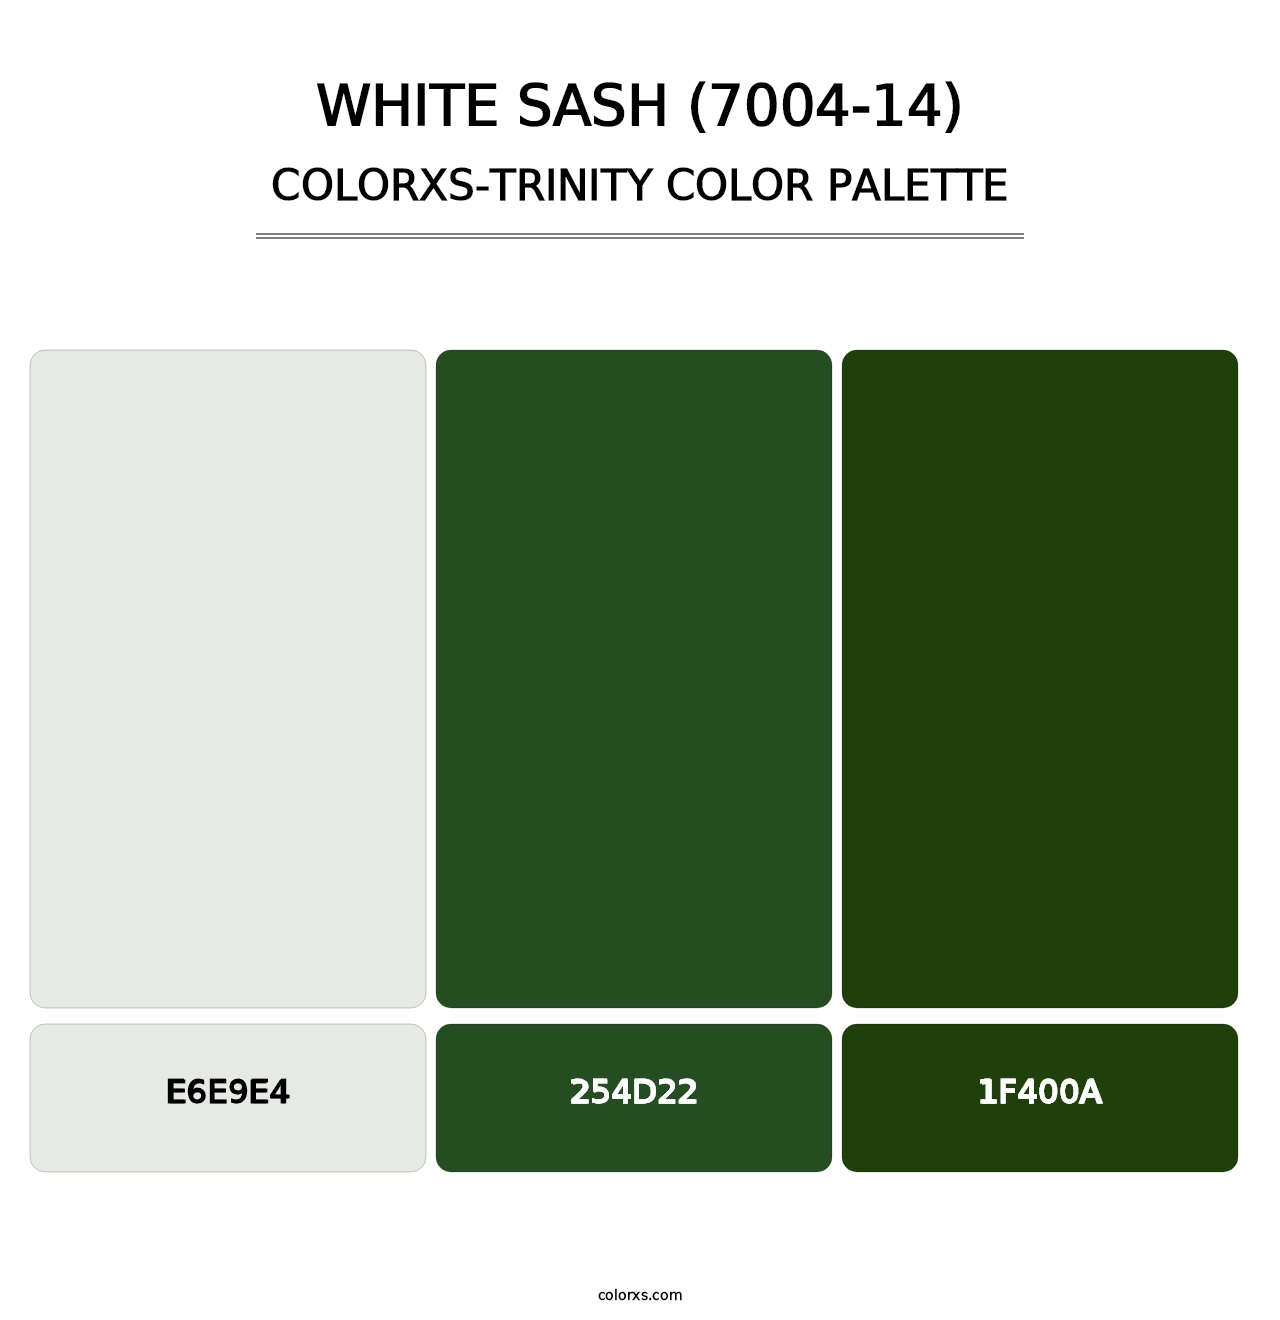 White Sash (7004-14) - Colorxs Trinity Palette